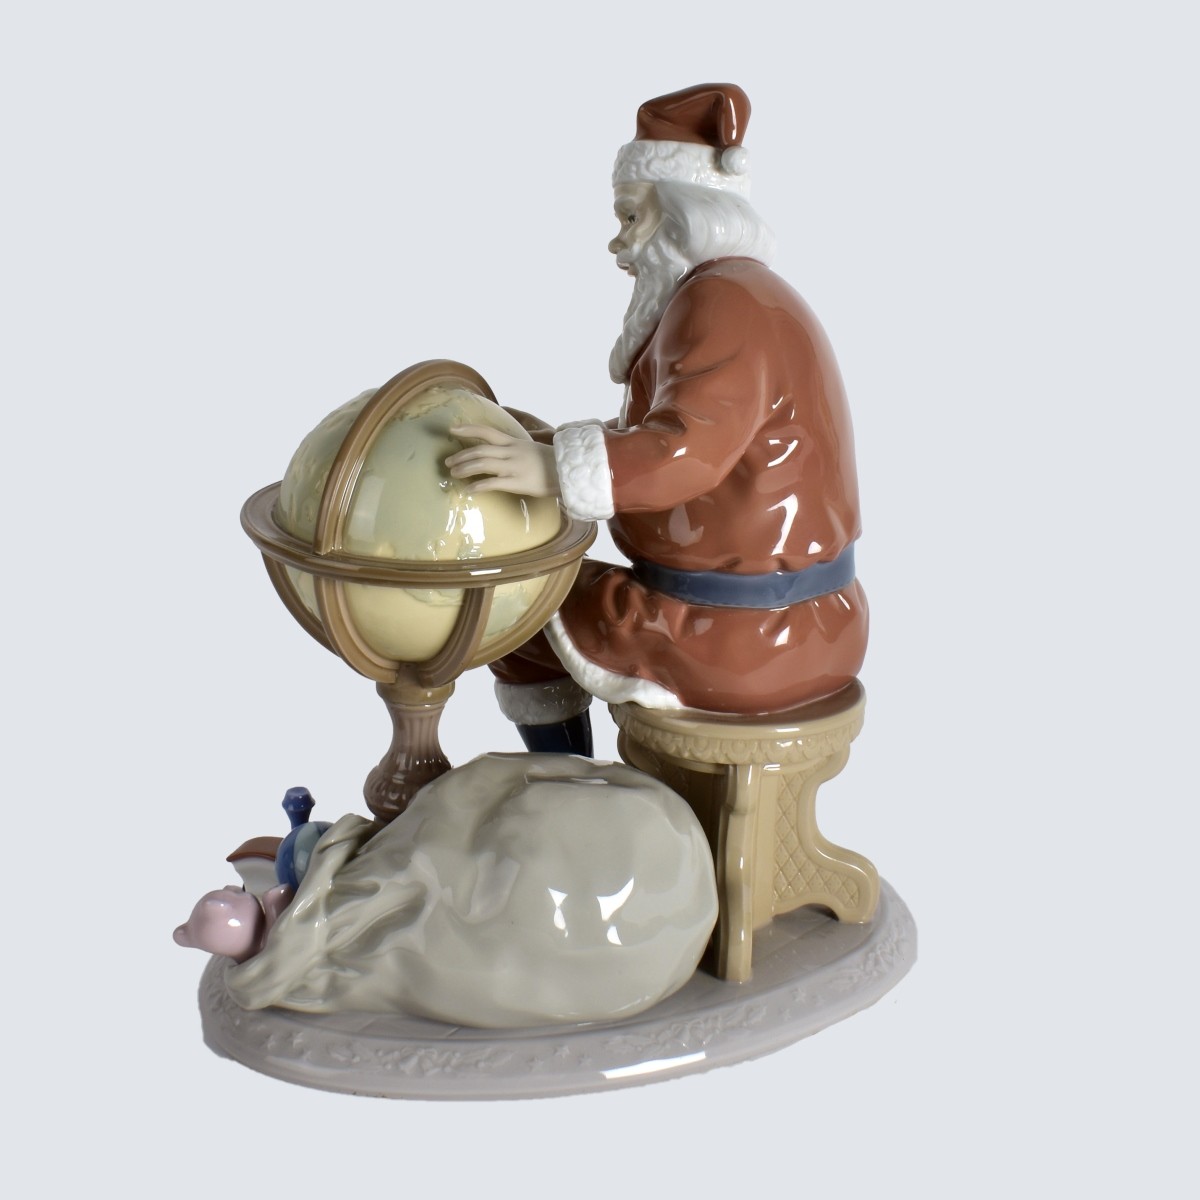 Lladro "Christmas Journey" Figurine